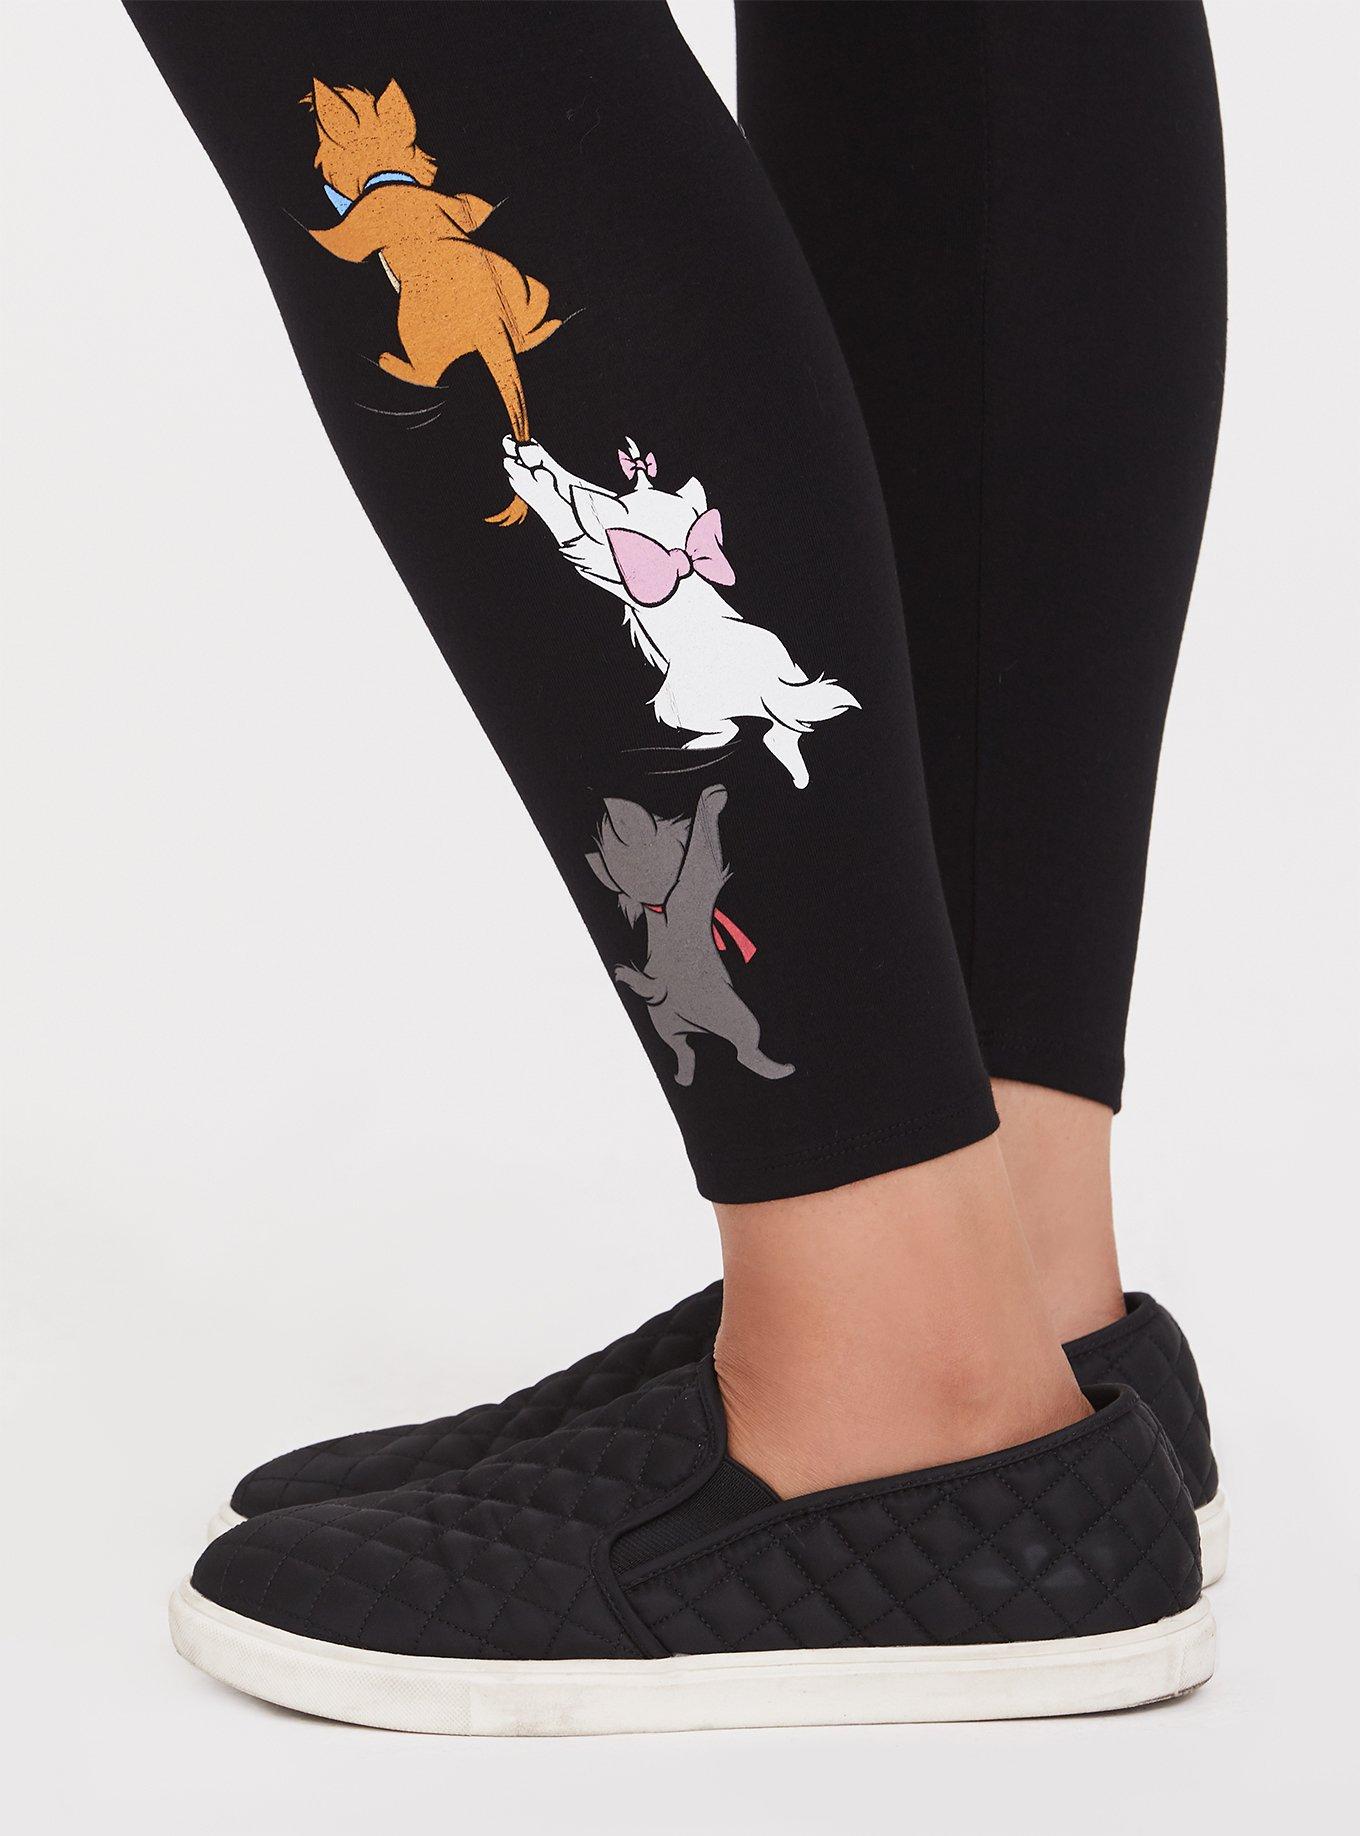 Plus Size - Disney The Aristocats Cat Character Crop Black Legging - Torrid